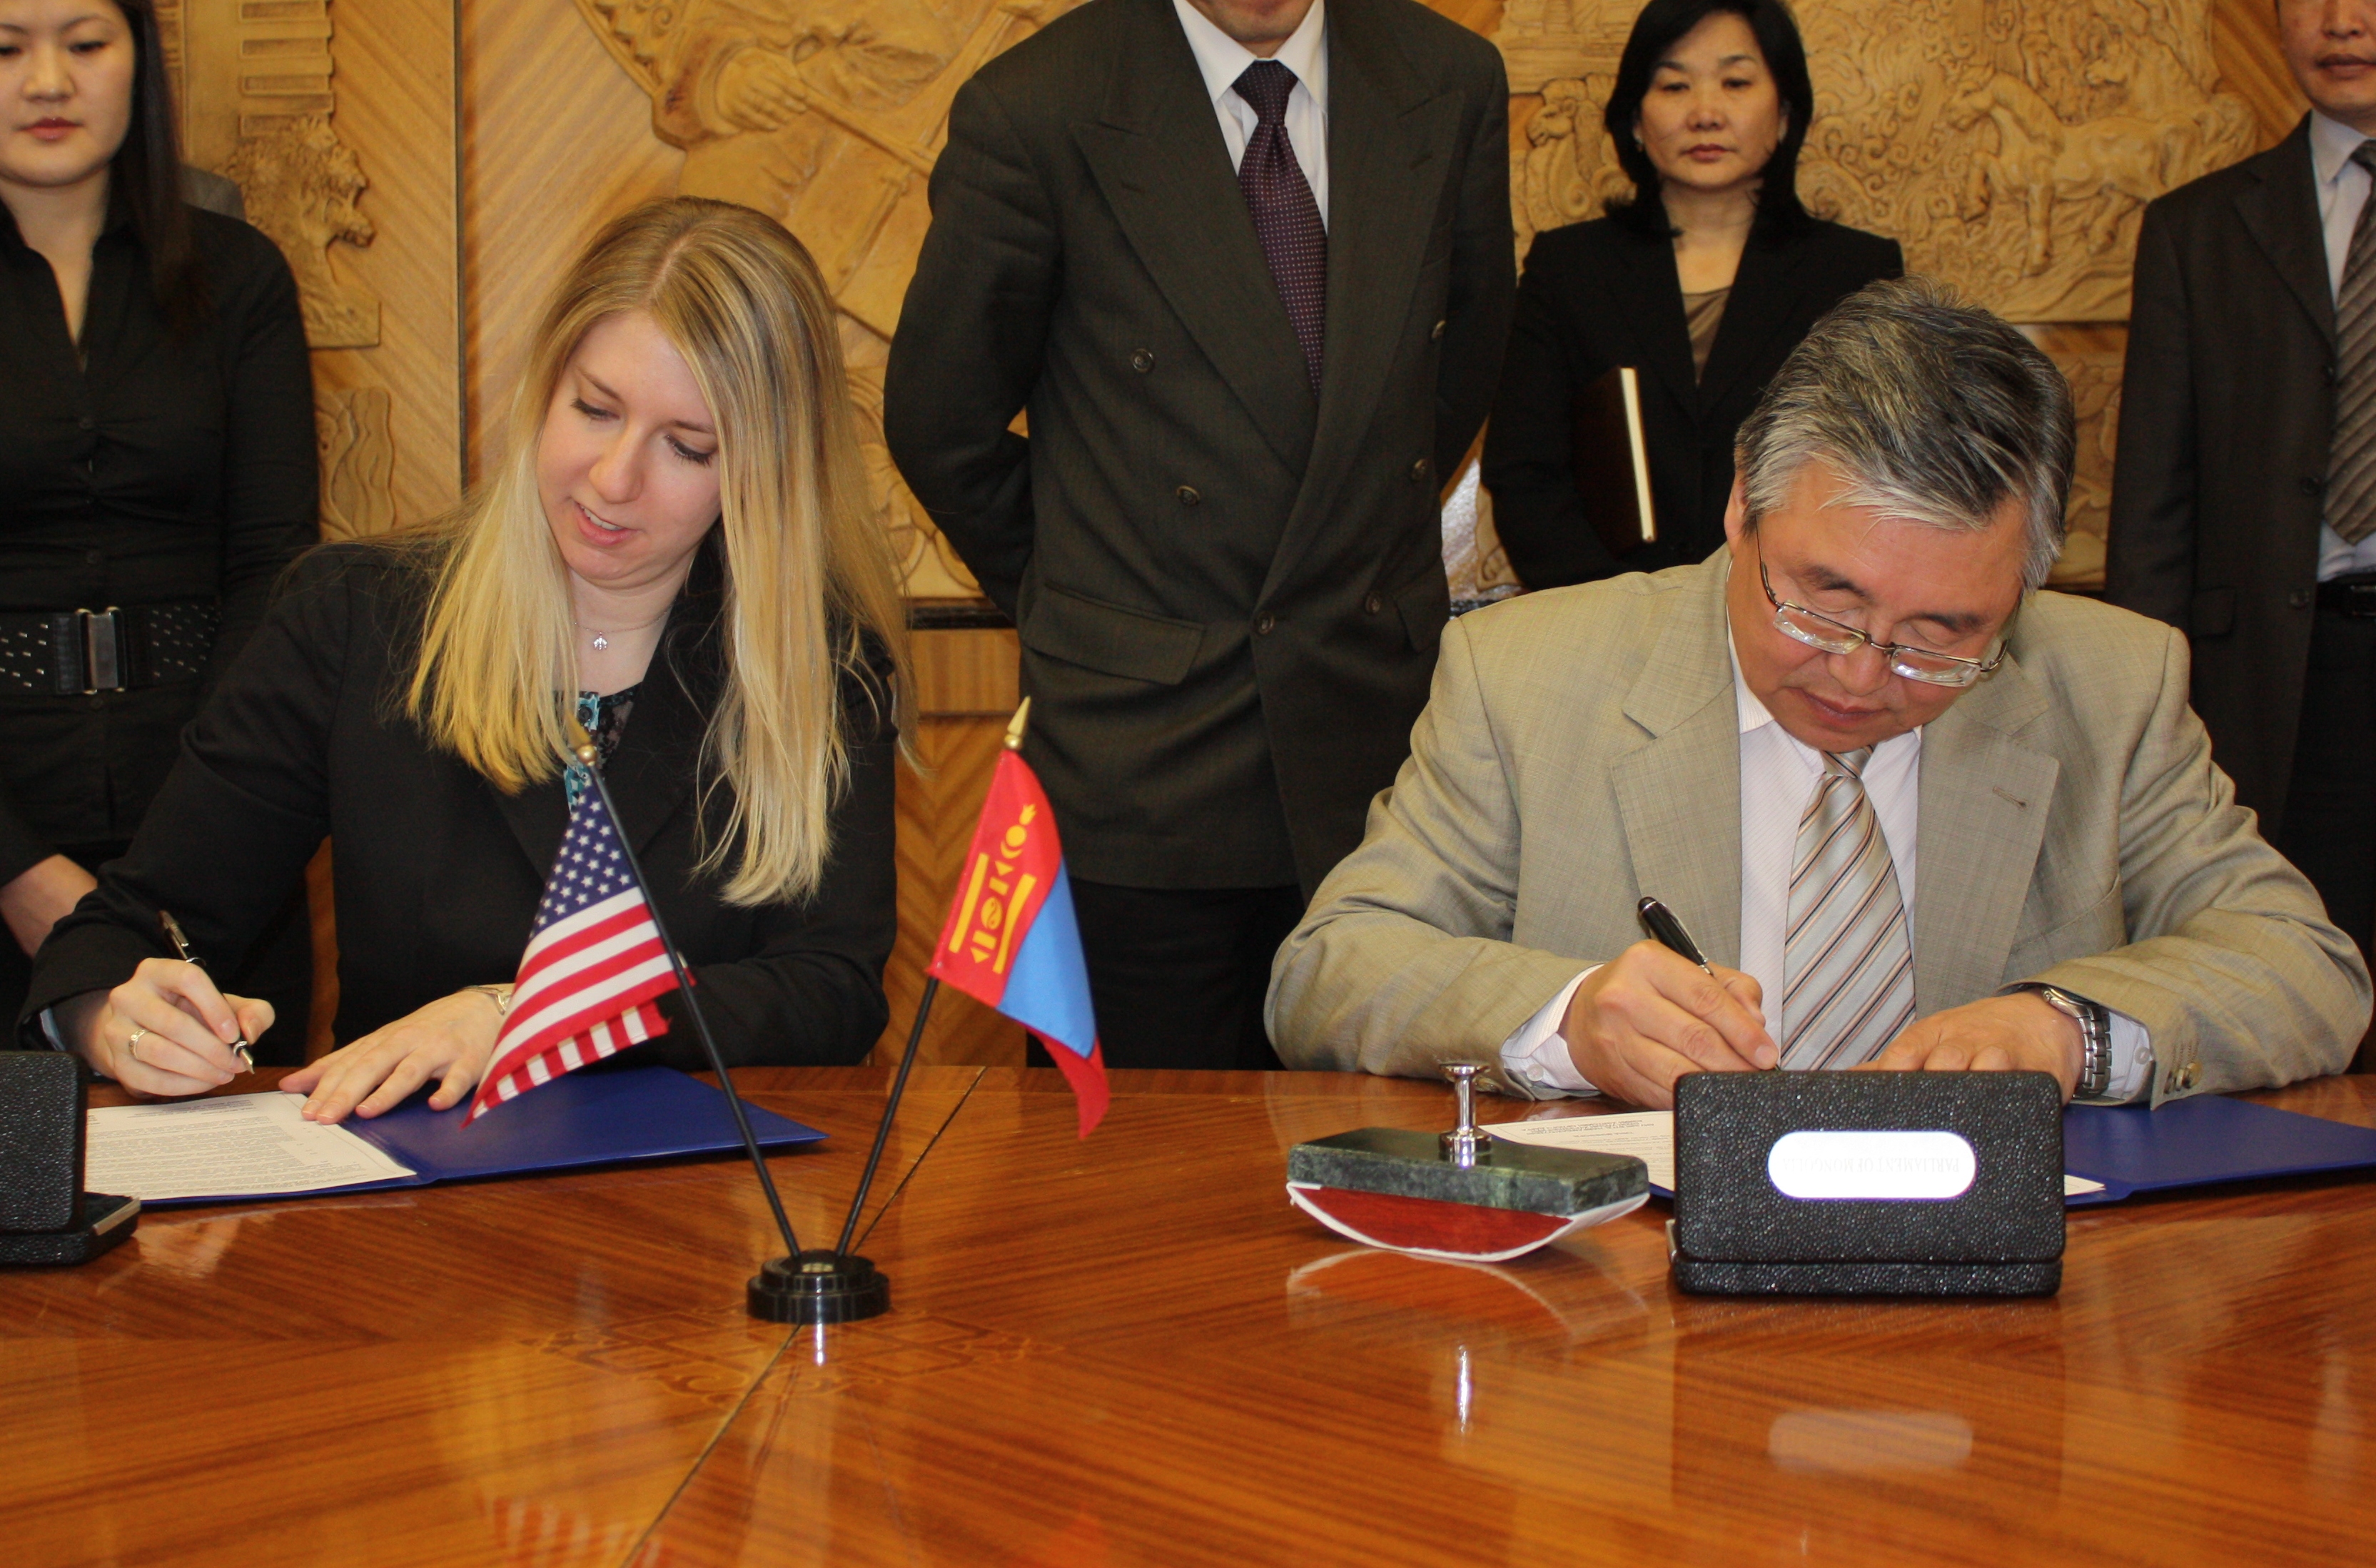 Ts. Sharavdorj, Mongolian Parliament General Secretary, signs the memorandum of understanding with Tina Mufford, IRI's Deputy Director for Asia